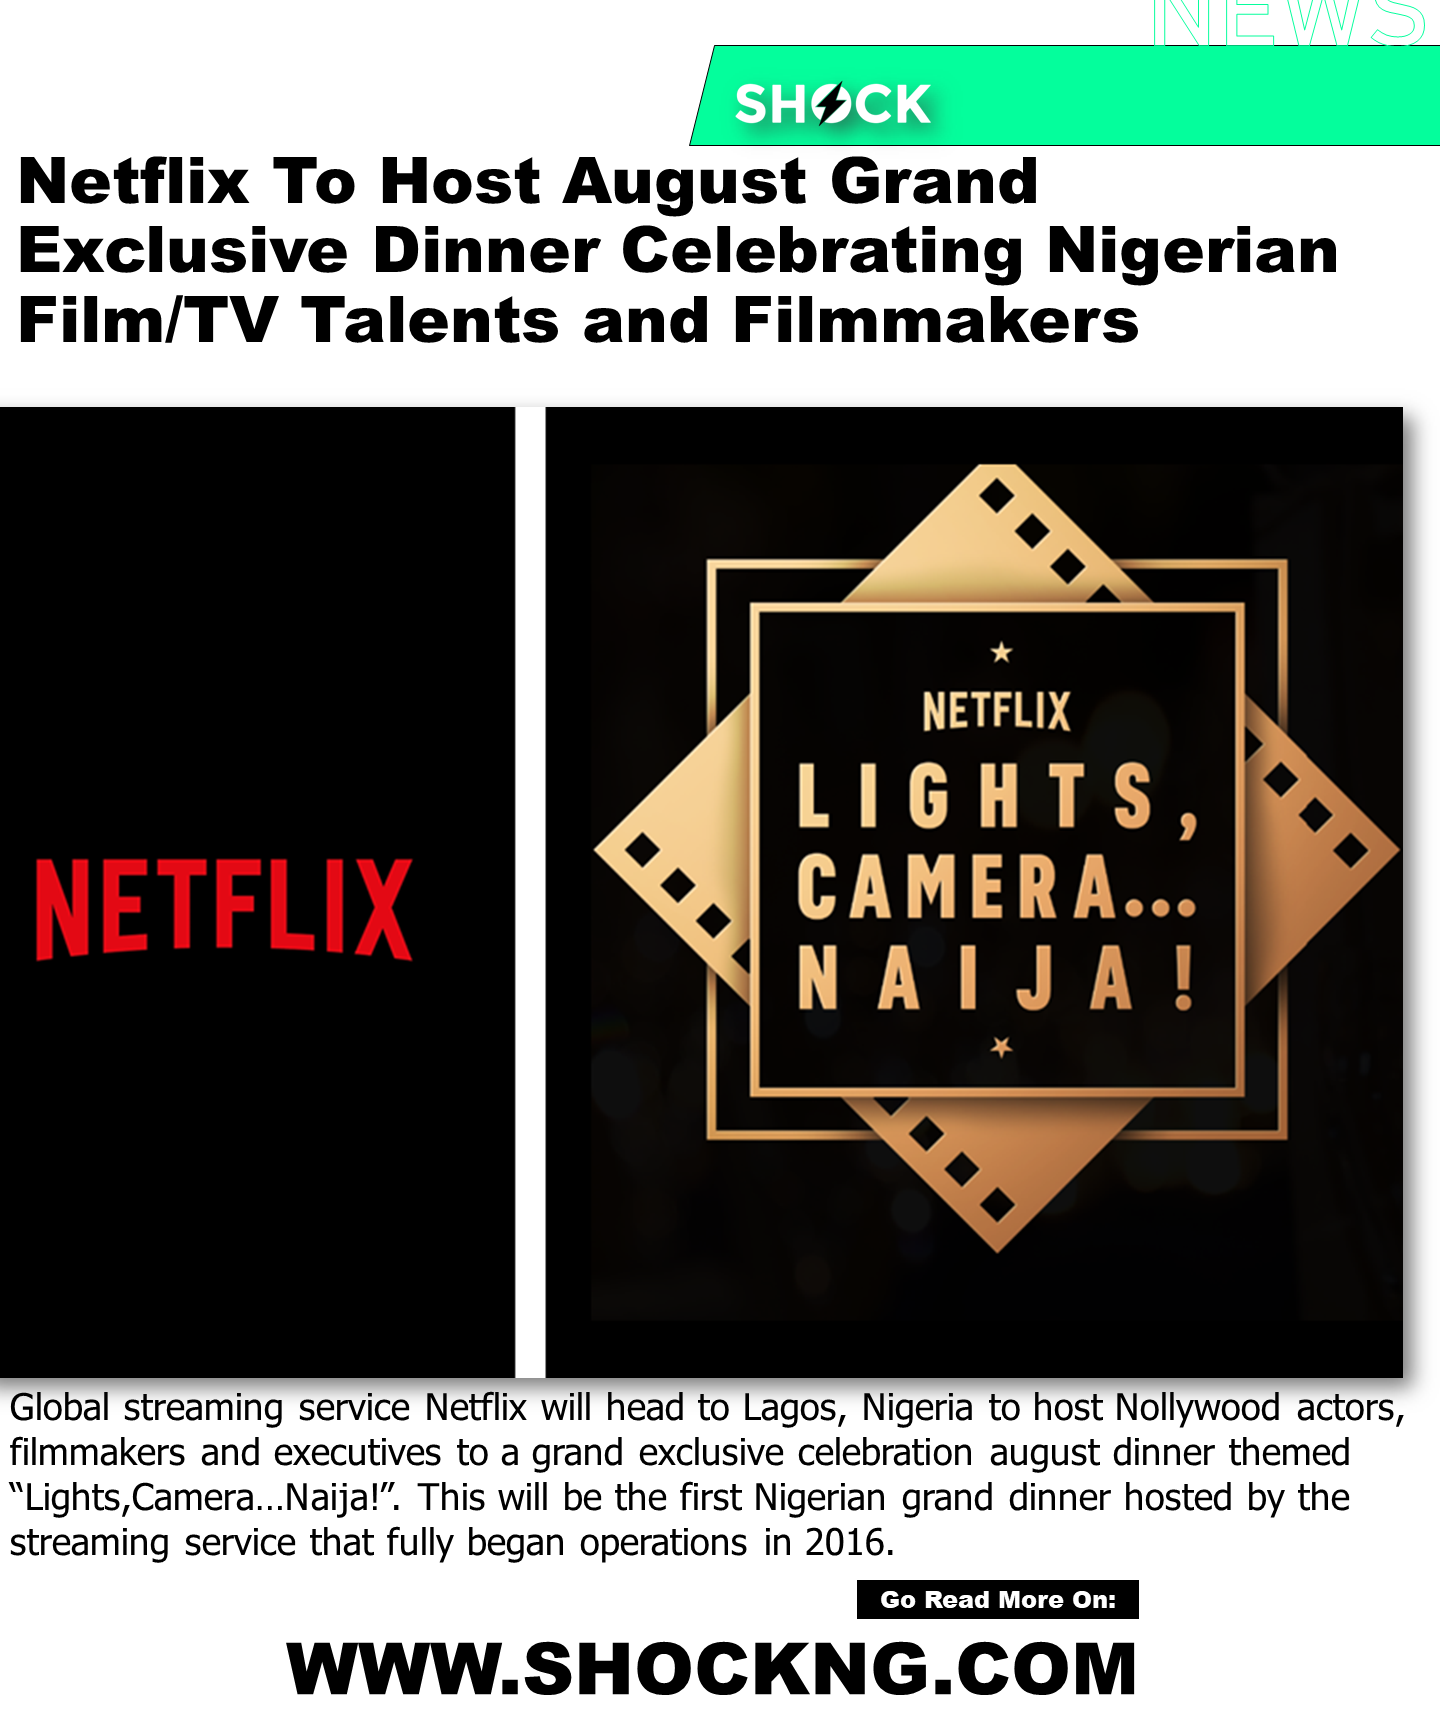 Netflix dinner - Netflix To Host August Grand Exclusive Dinner Celebrating Nigerian Film/TV Talents and Filmmakers